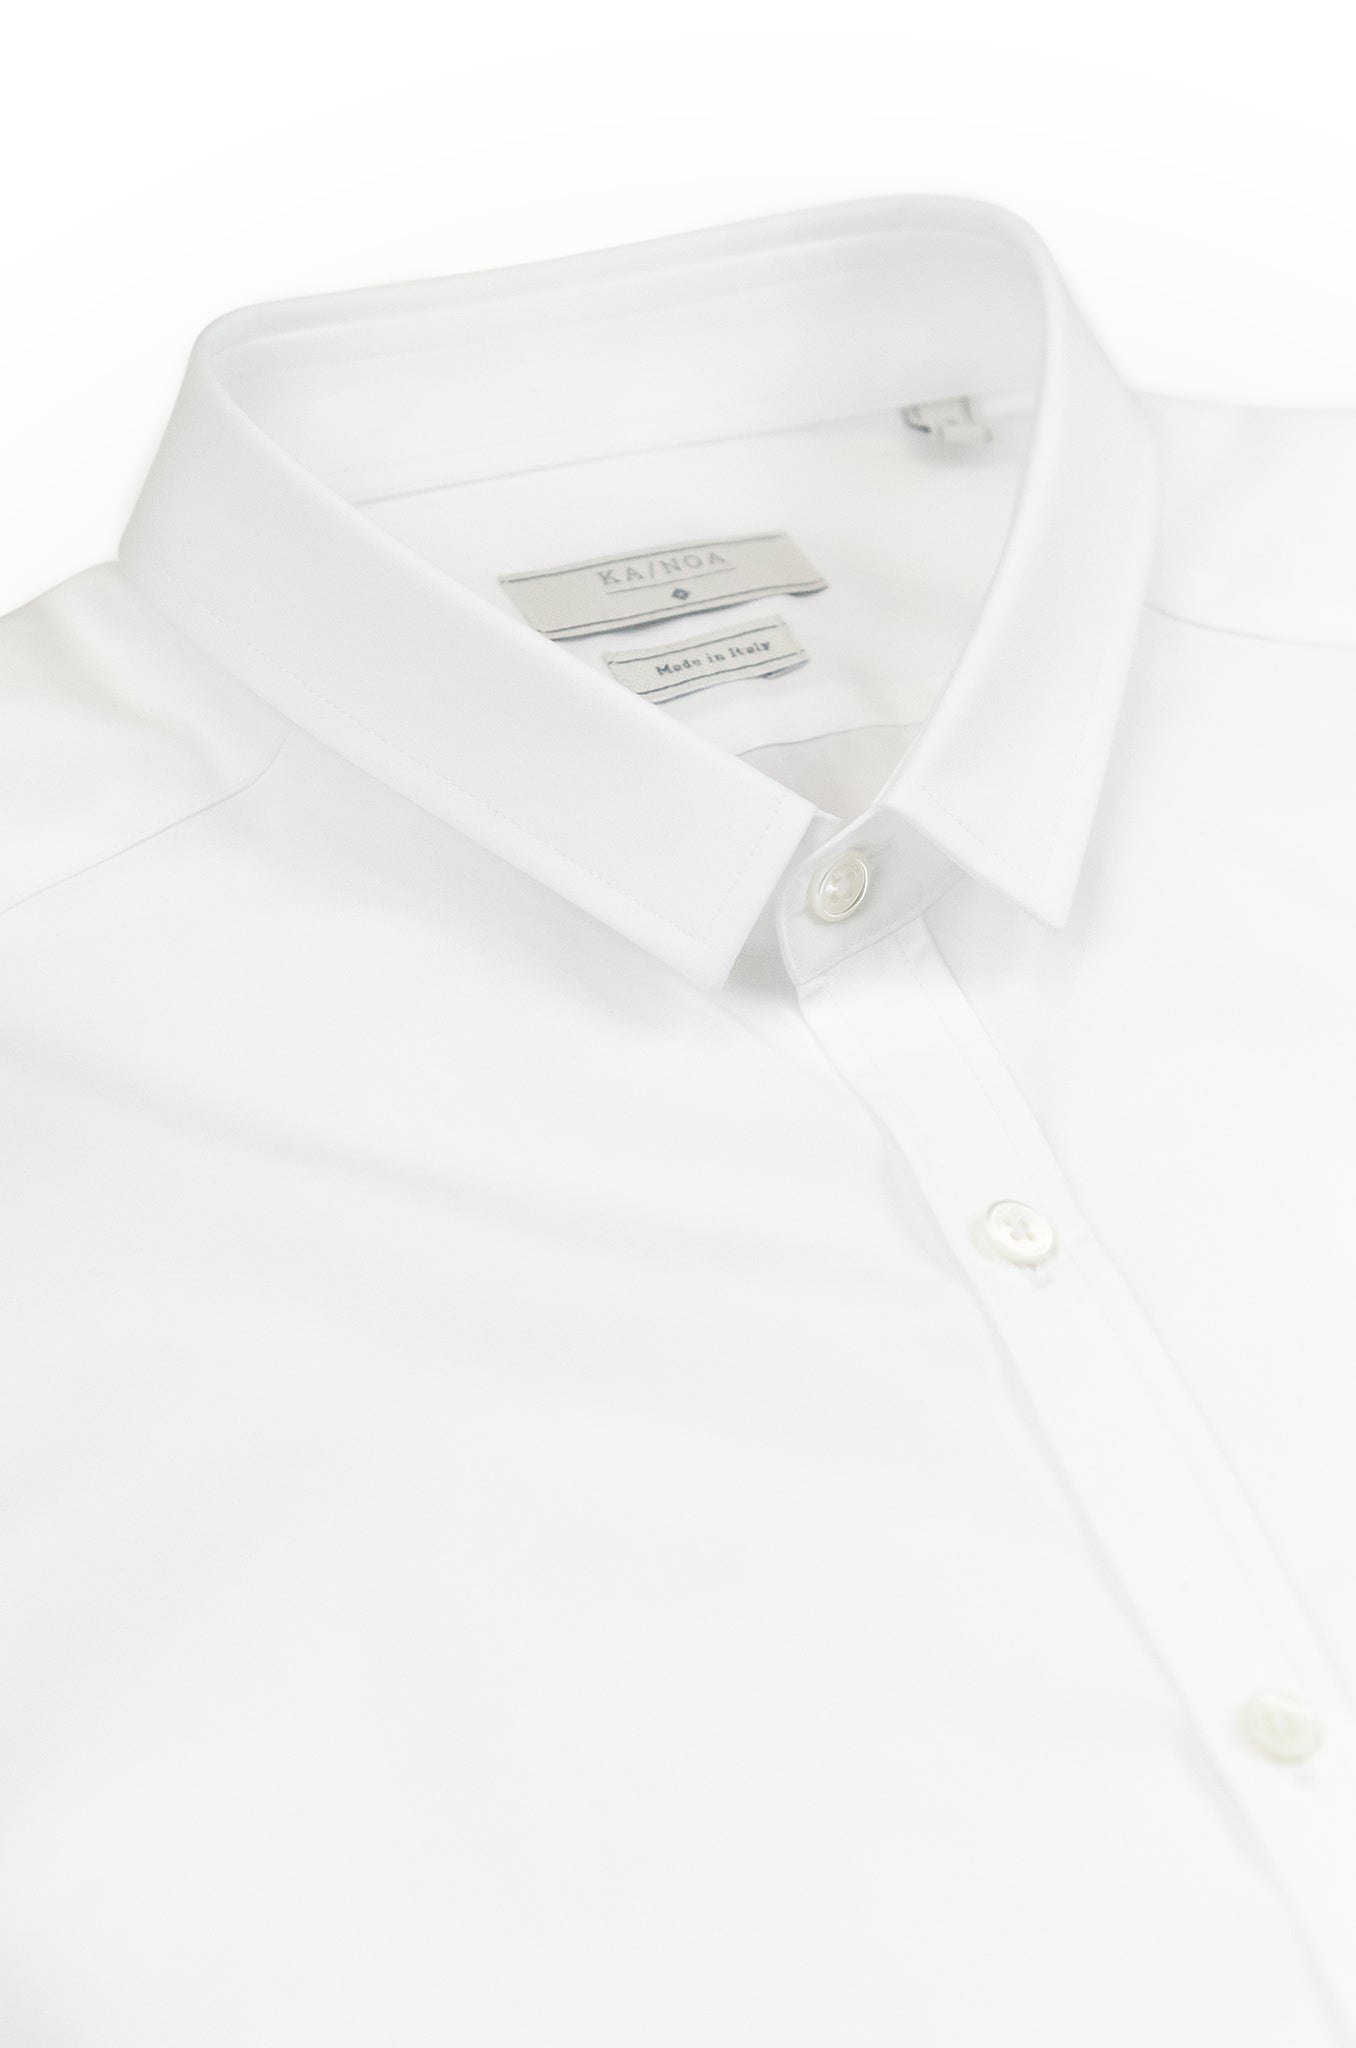 Timothee shirt cotton popeline (white)